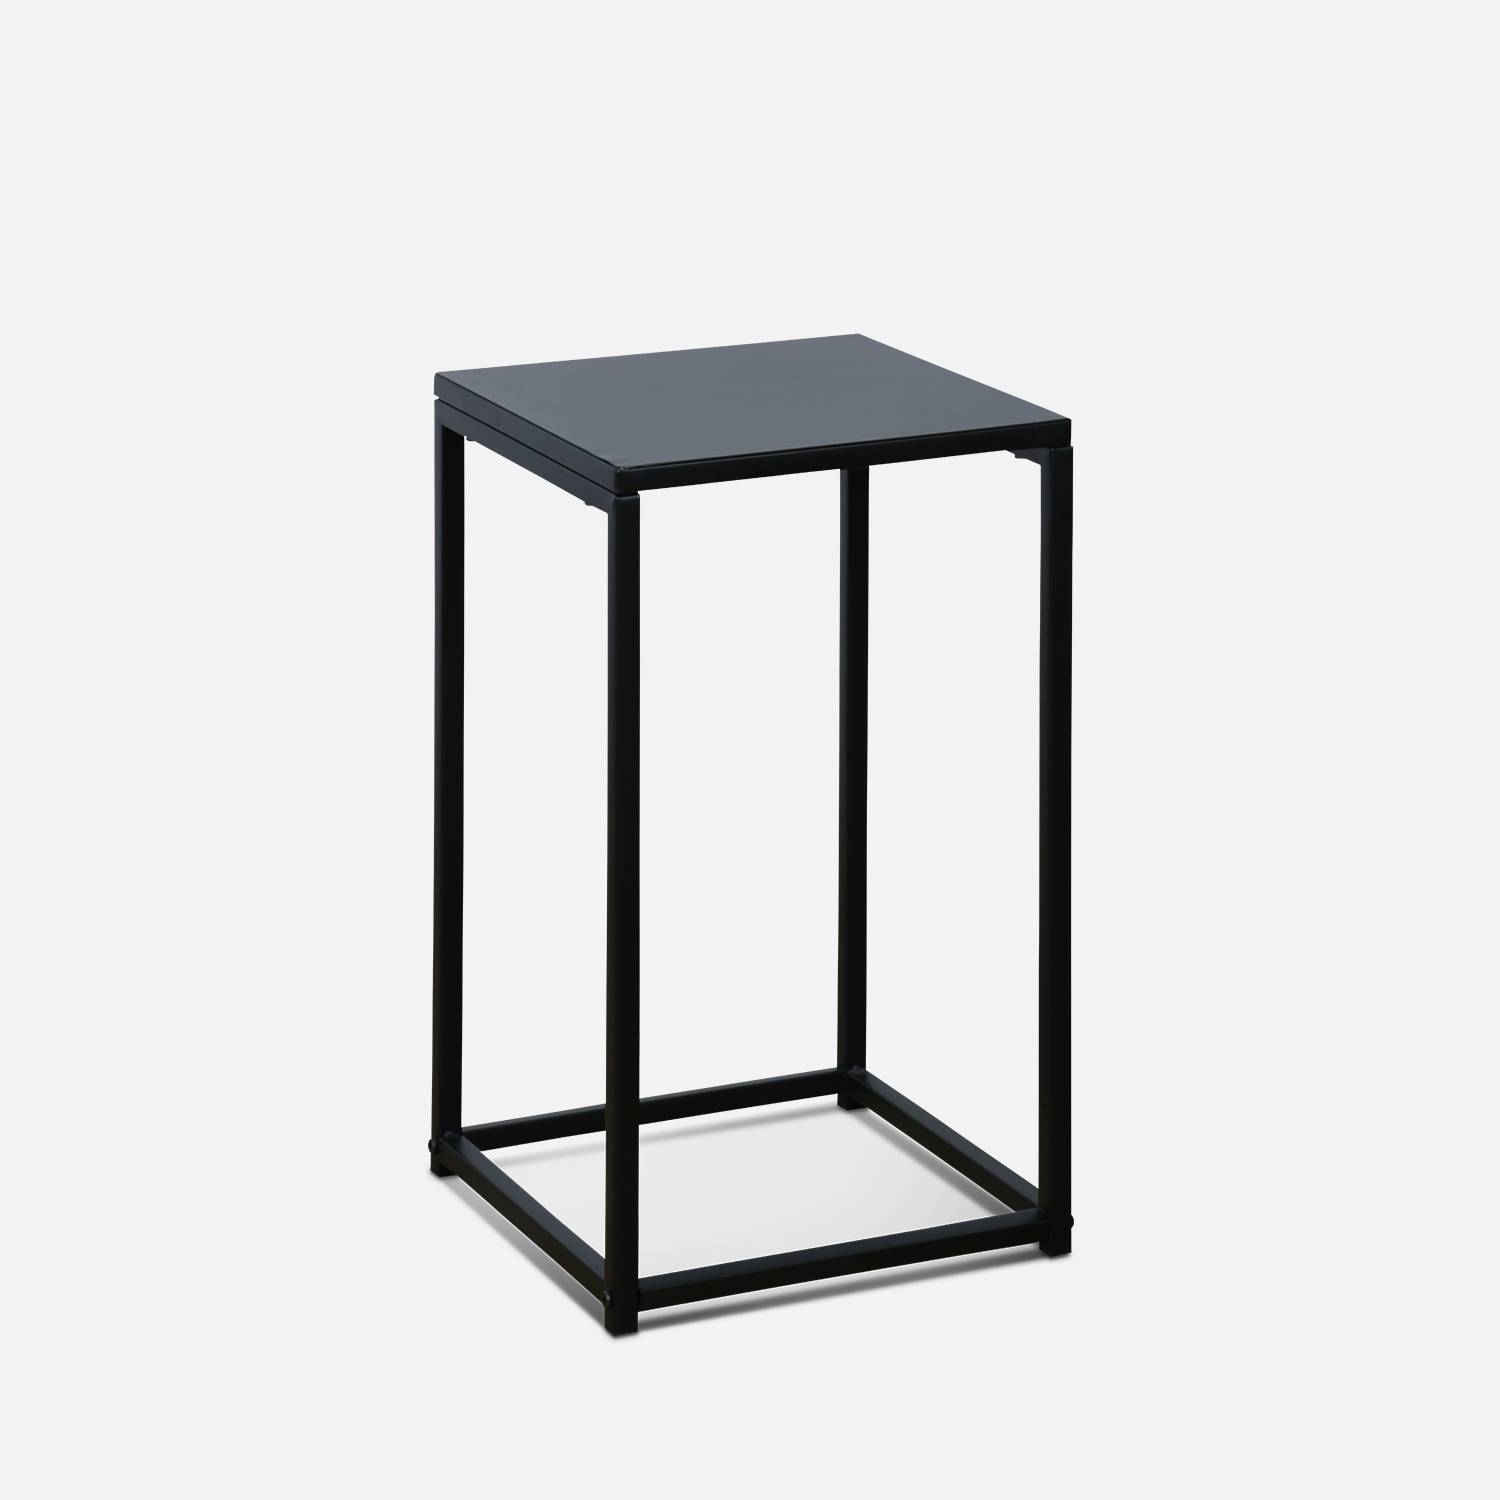 Set di 2 tavolini neri - Industrial - estremità del divano 34x34x74cm / 30x30x54cm Photo5